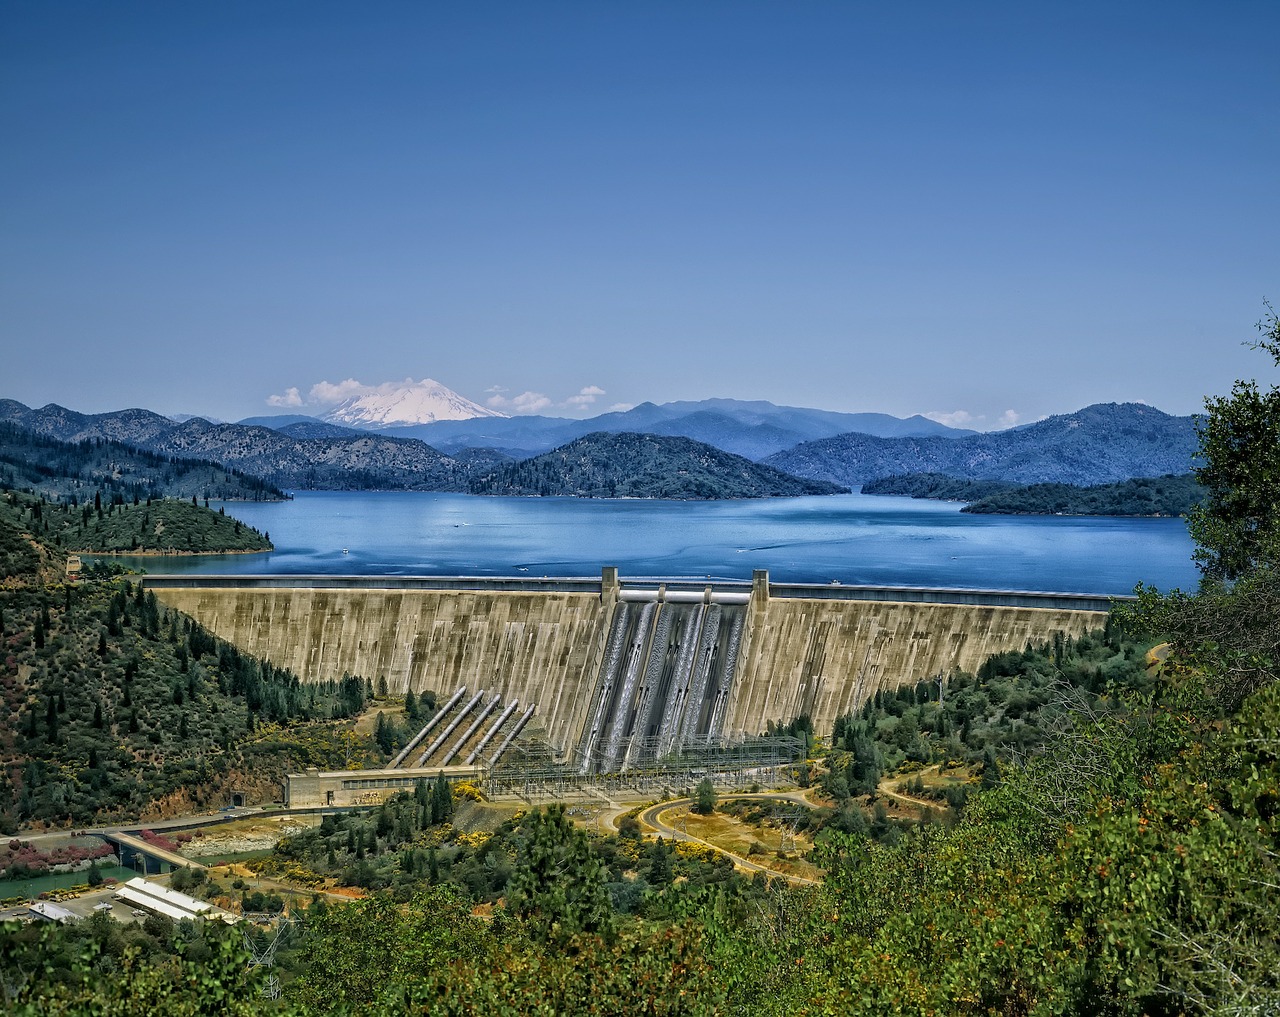 Image of the Fontana Dam in North Carolina